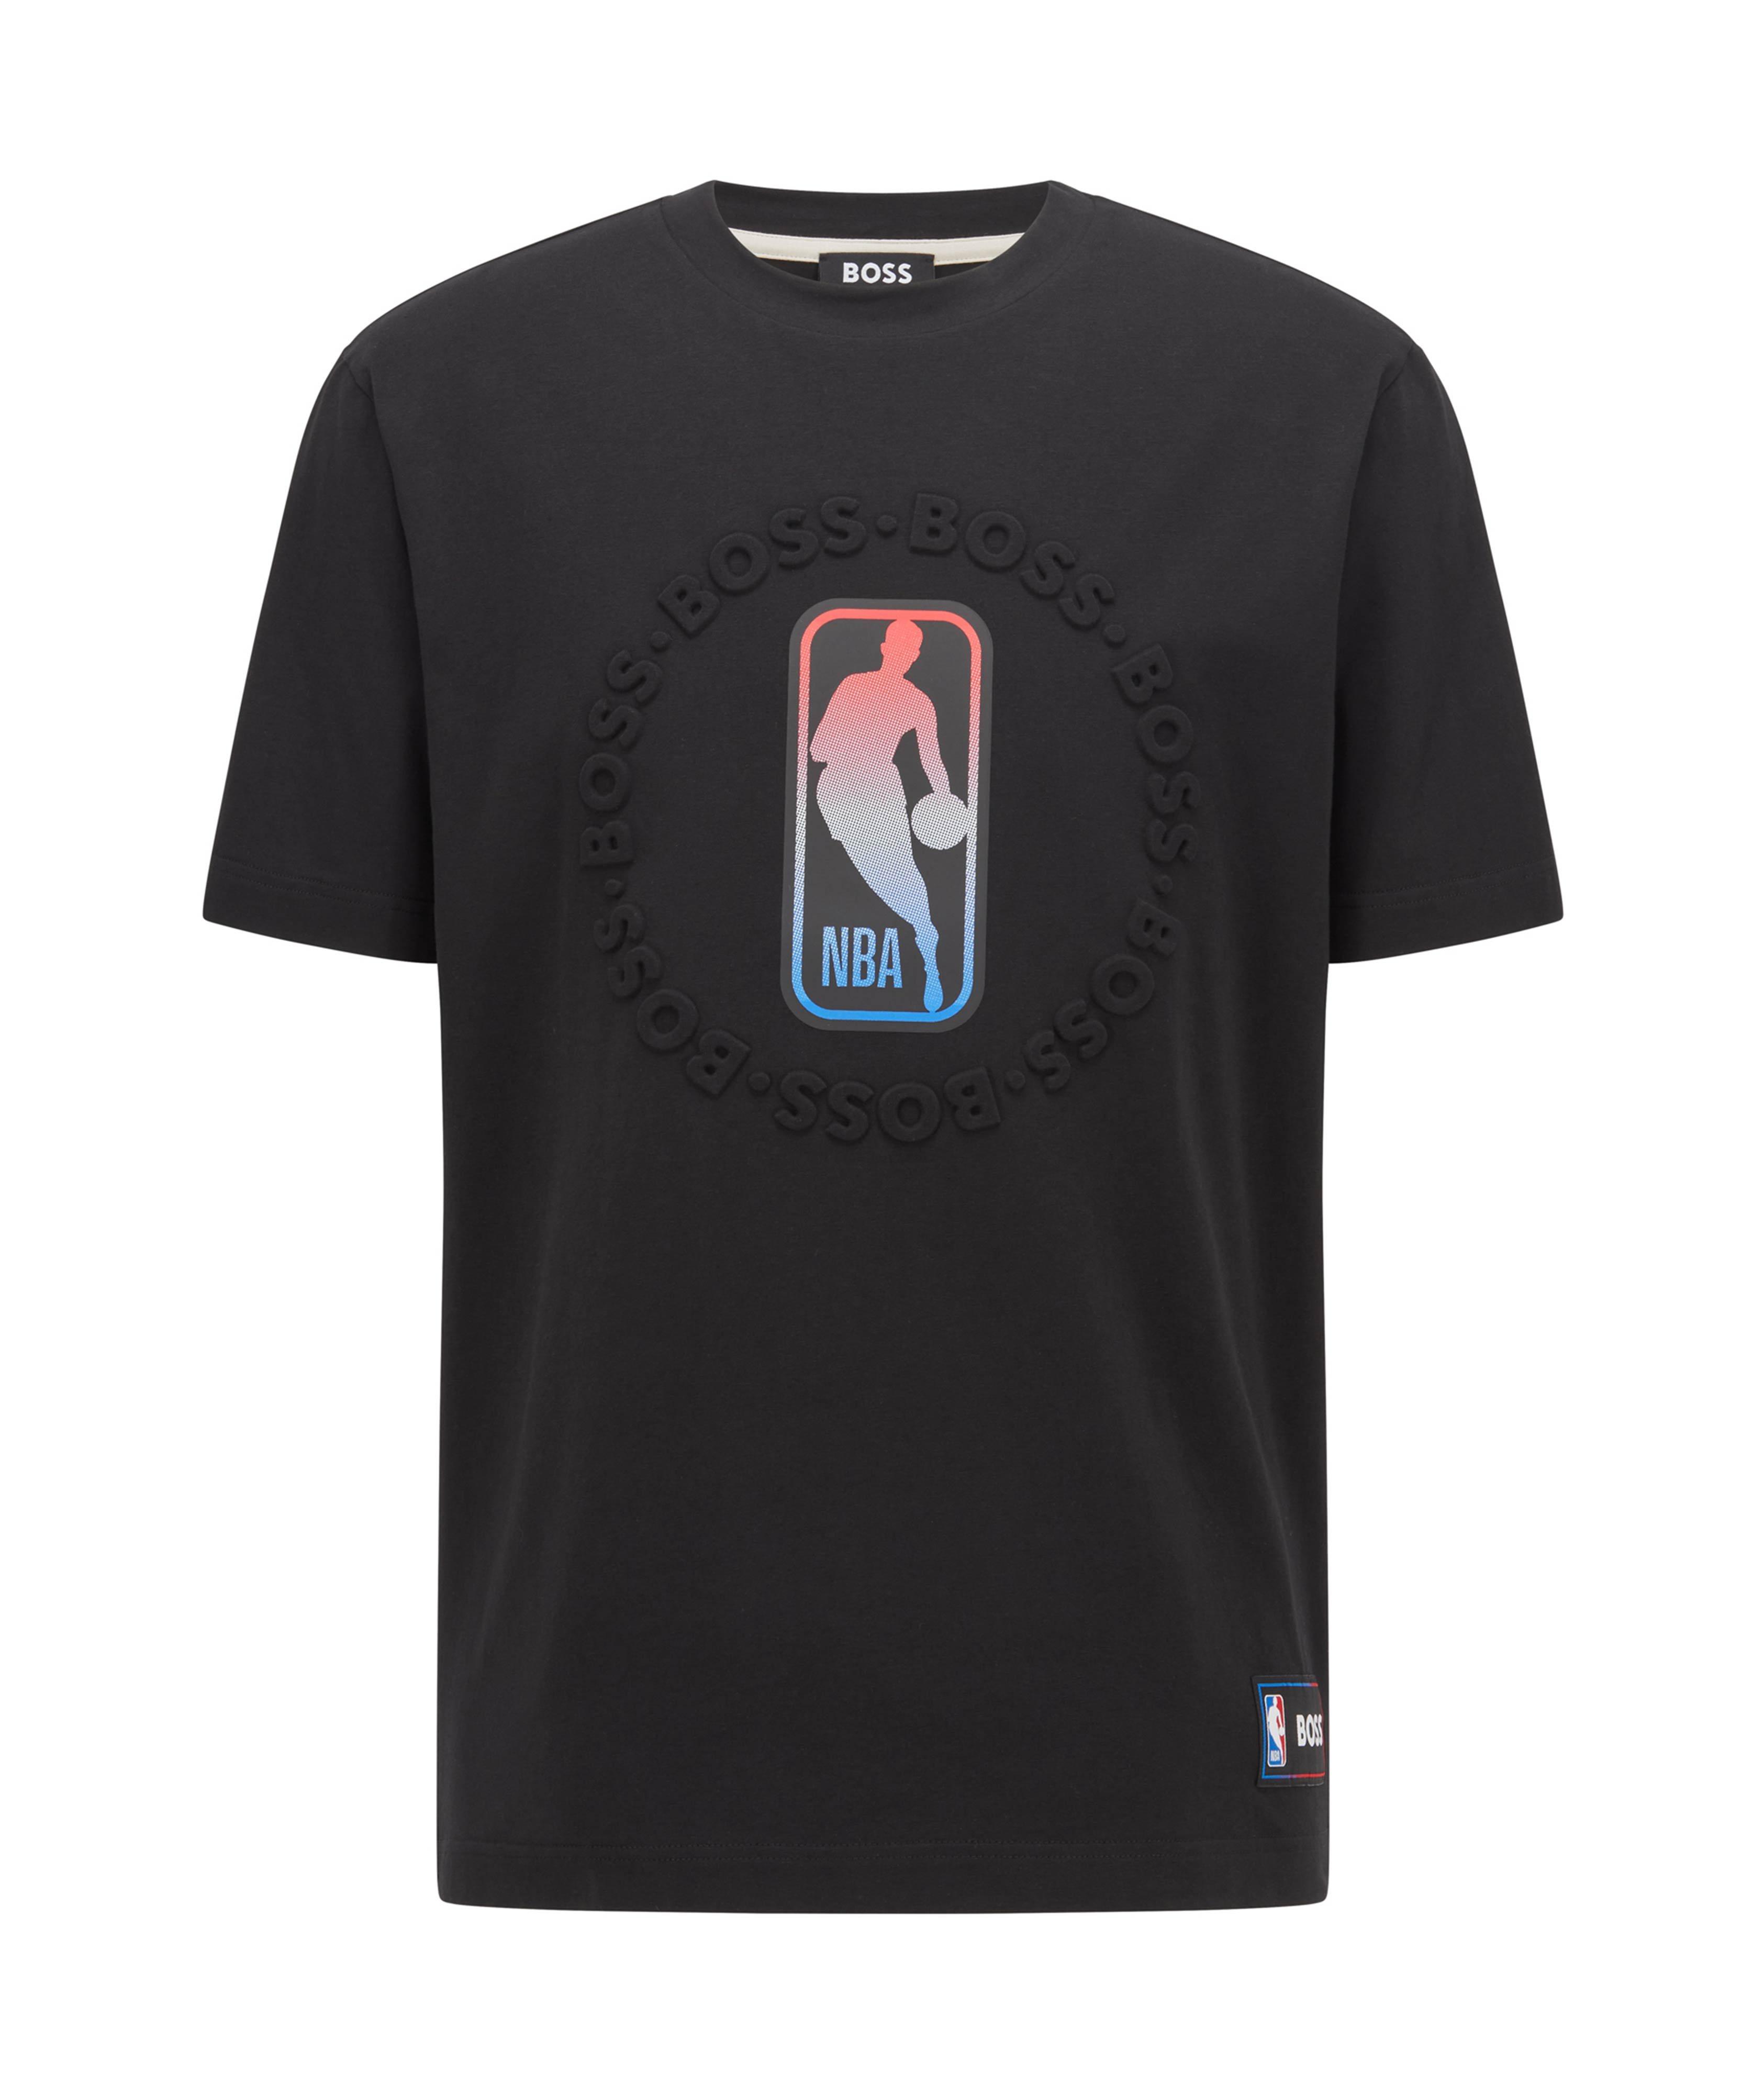 BOSS x NBA Logo T-Shirt image 0